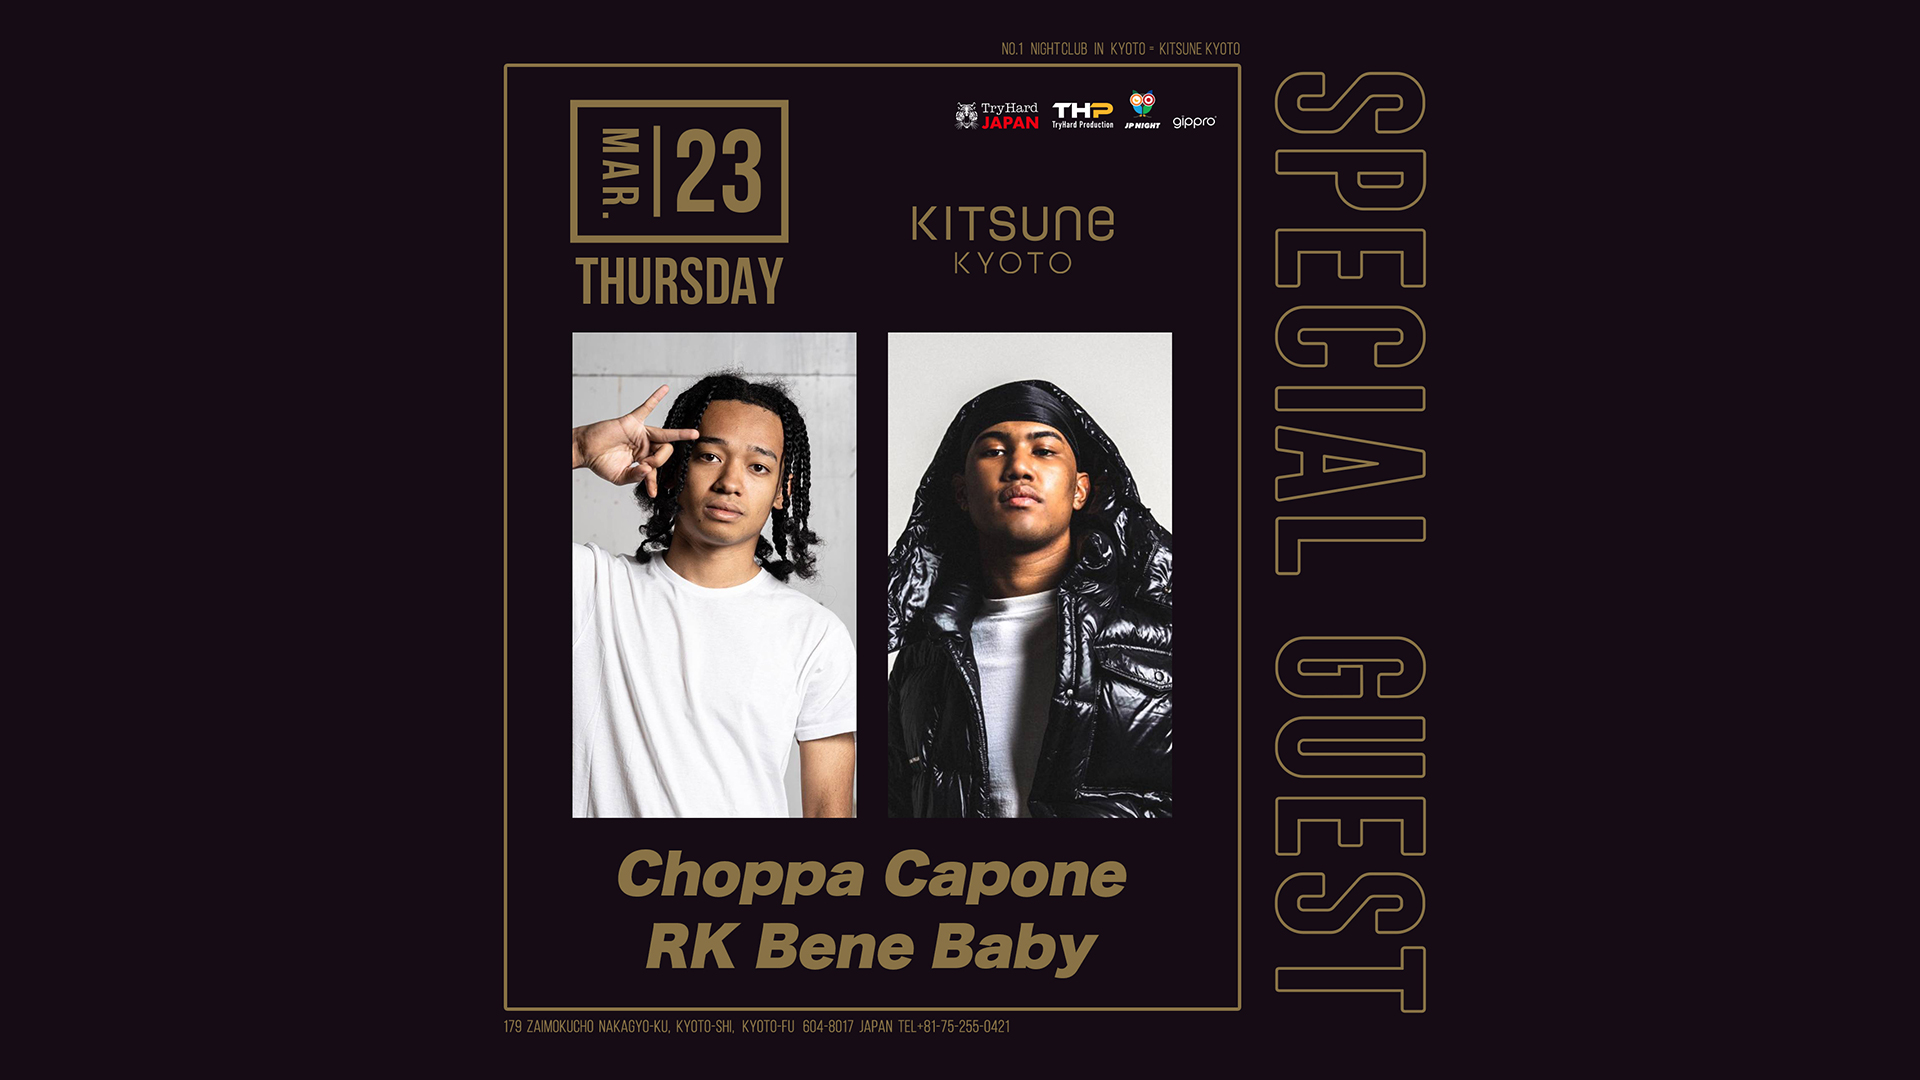 Choppa Capone / RK Bene Baby